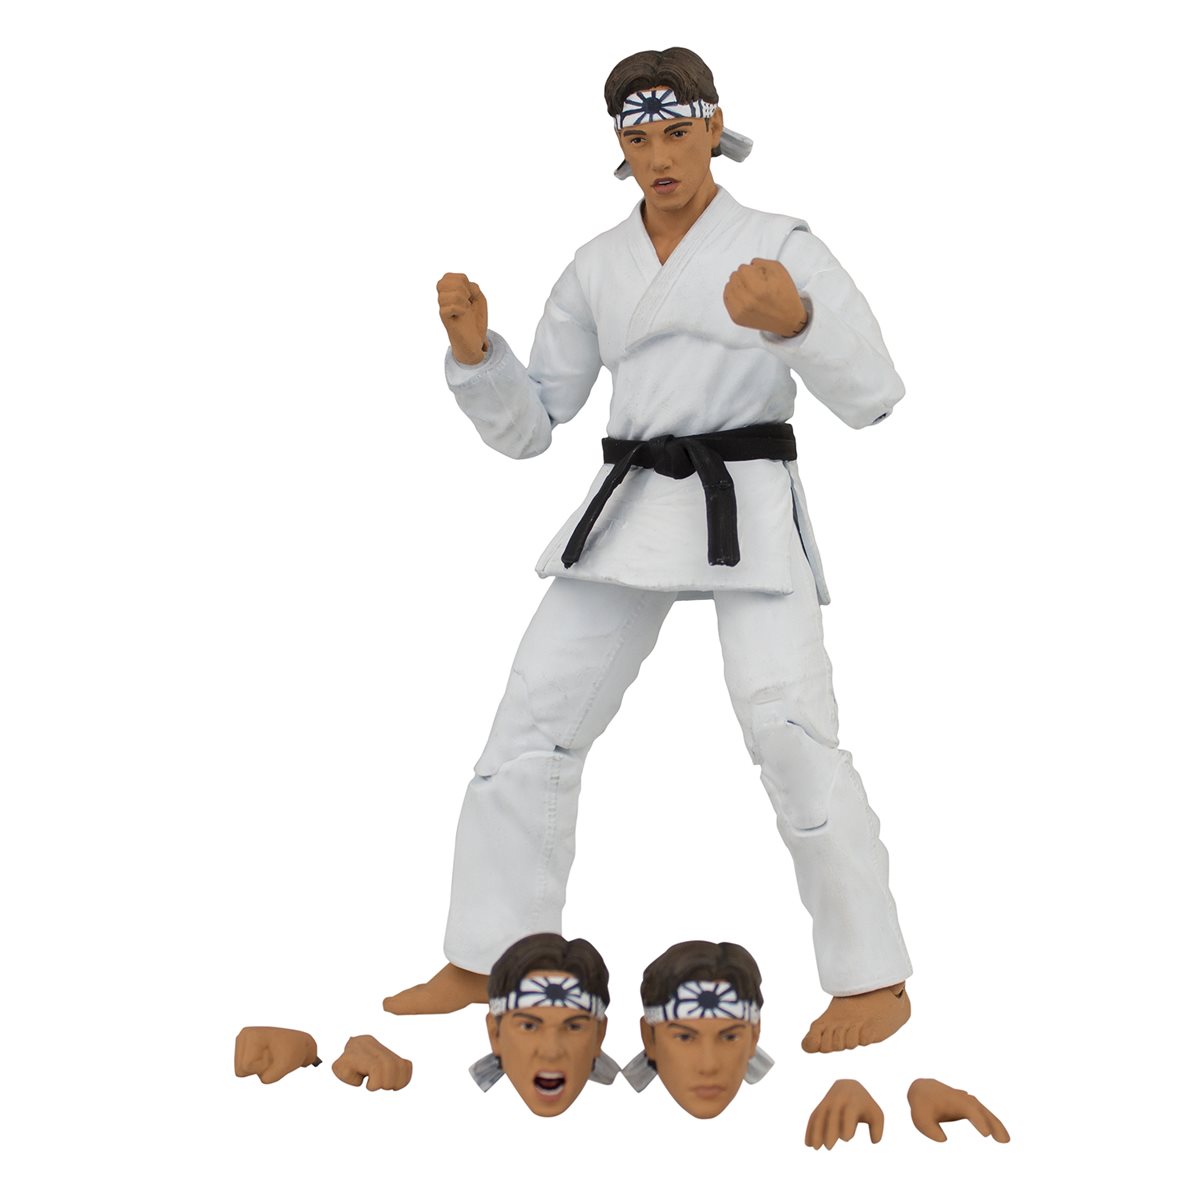 karate kid neca figures